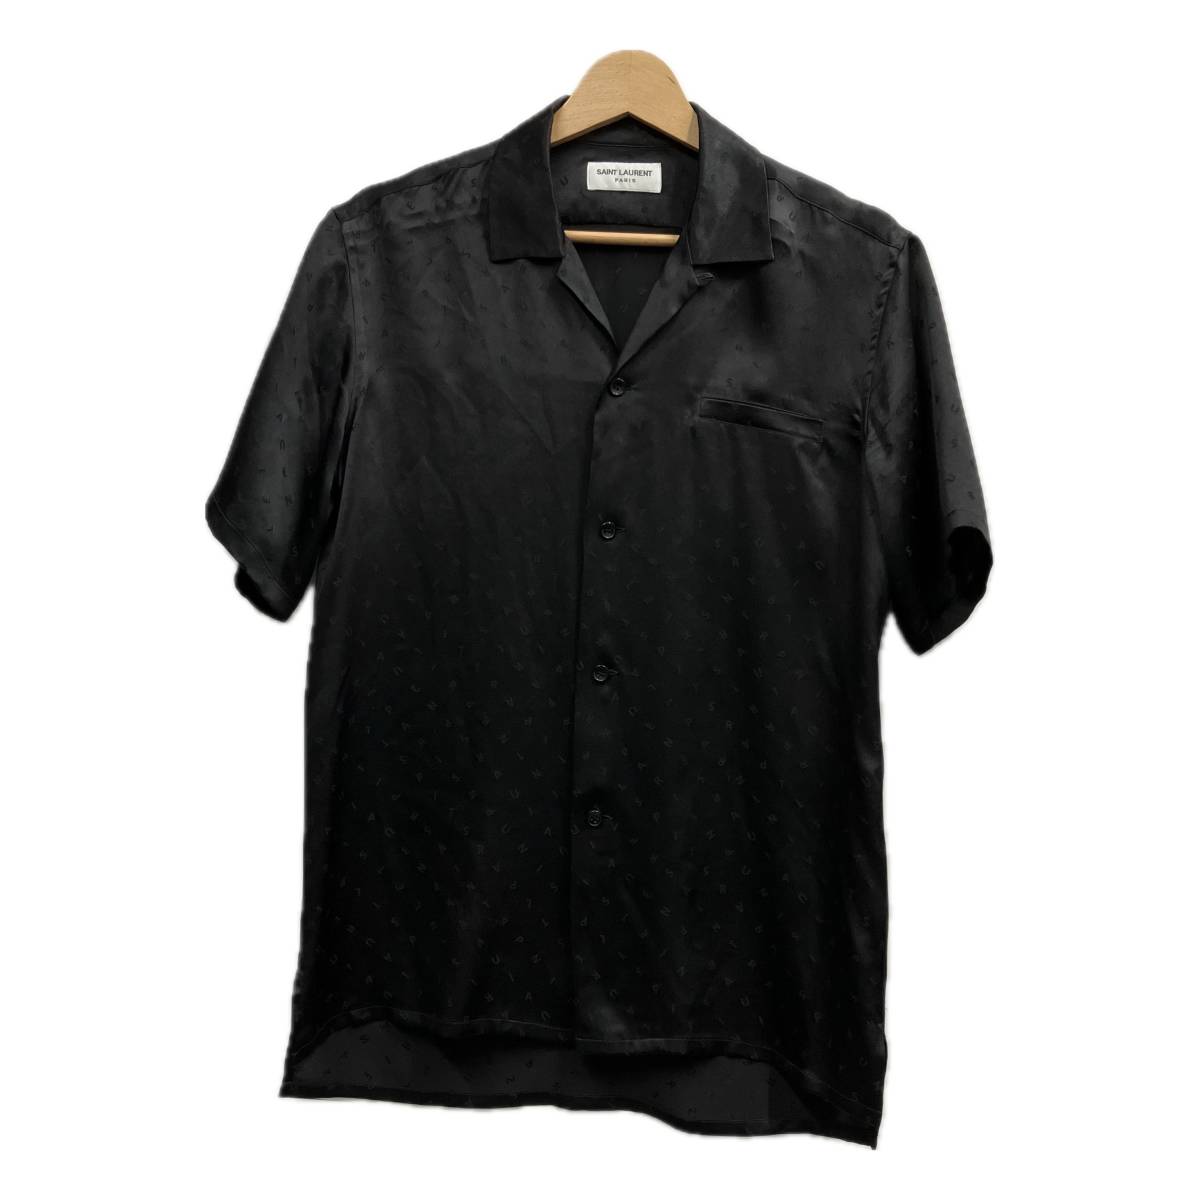 SAINT LAURENT PARIS サンローランパリ Shark Collared Short Sleeve Silk Shirt 531956 Y2E51 シルクシャツ 総柄 ブラック サイズ41/16